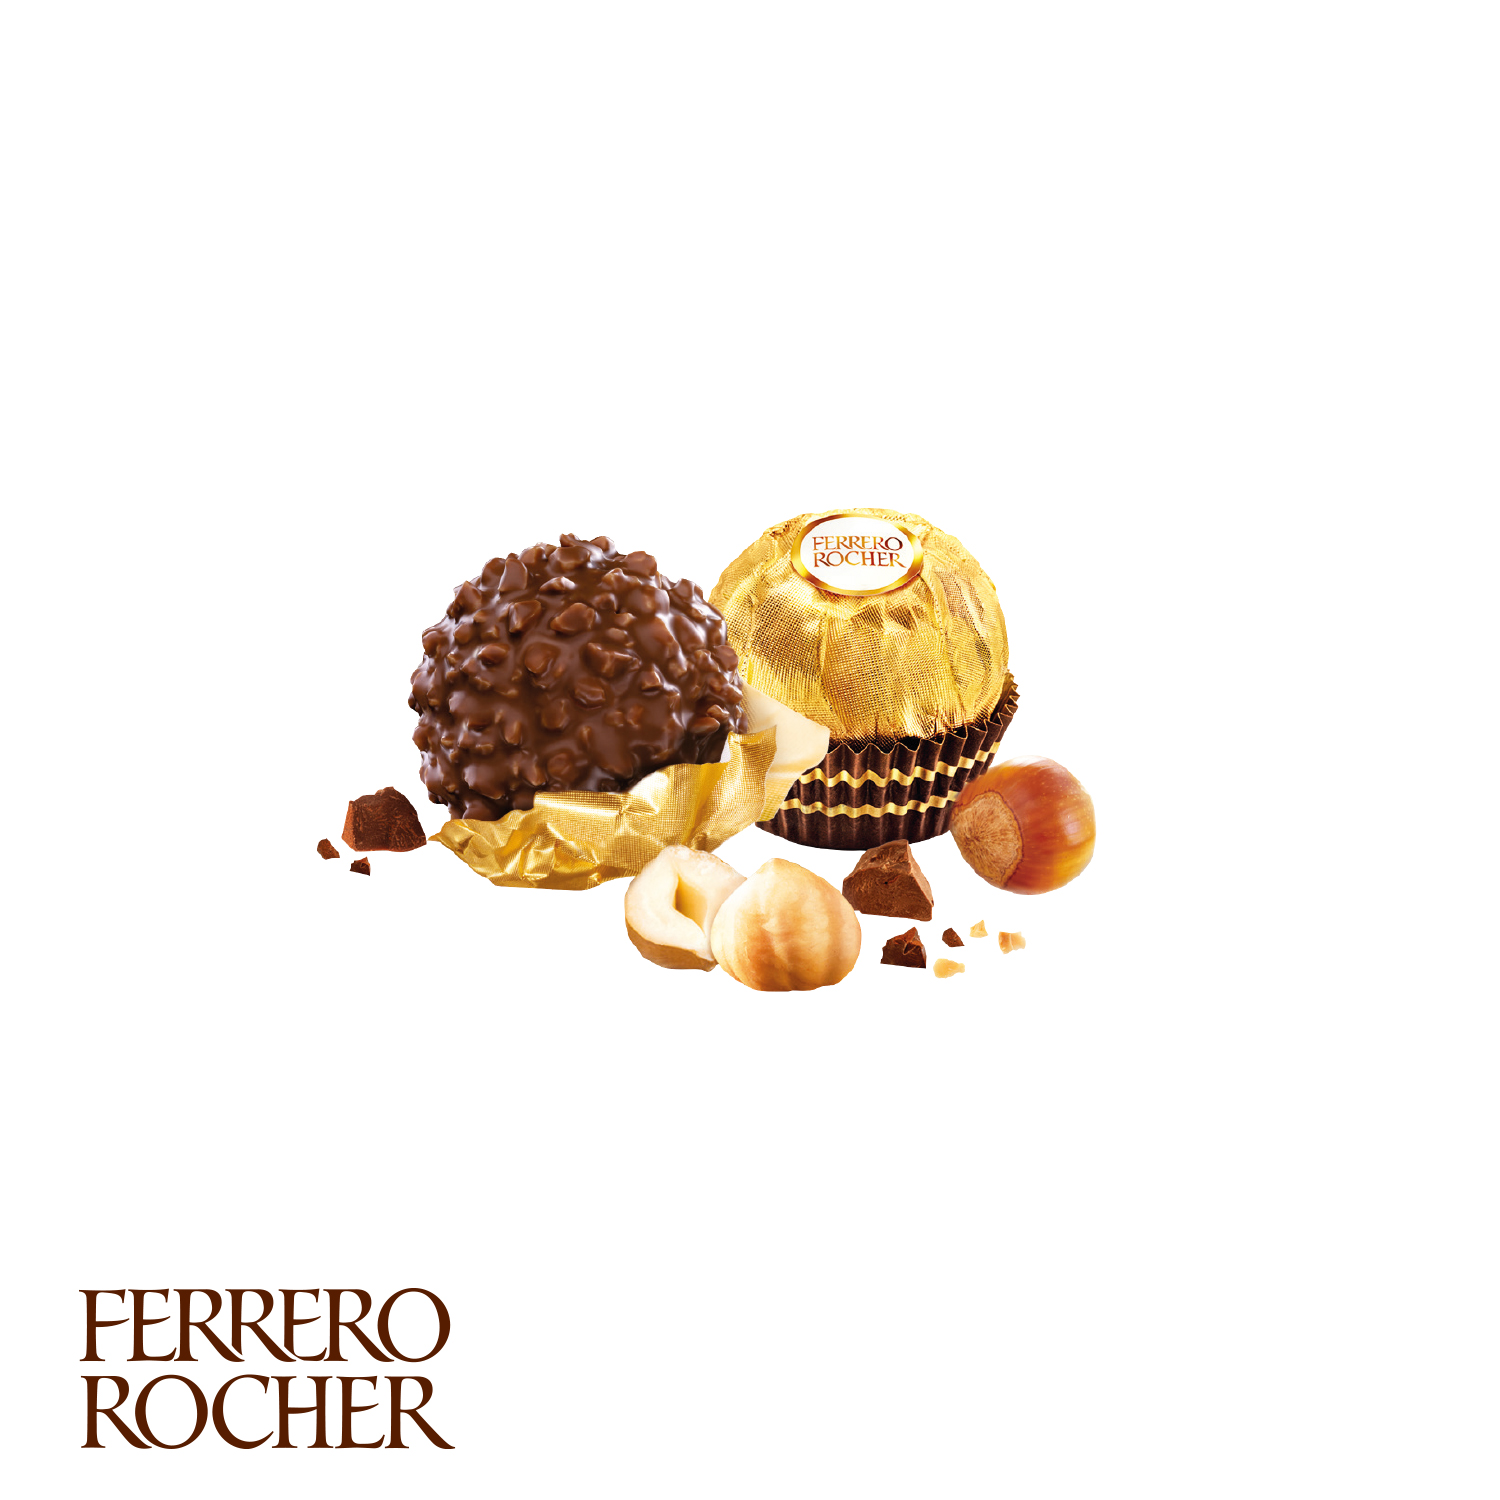 Werbewürfel mit Ferrero Rocher